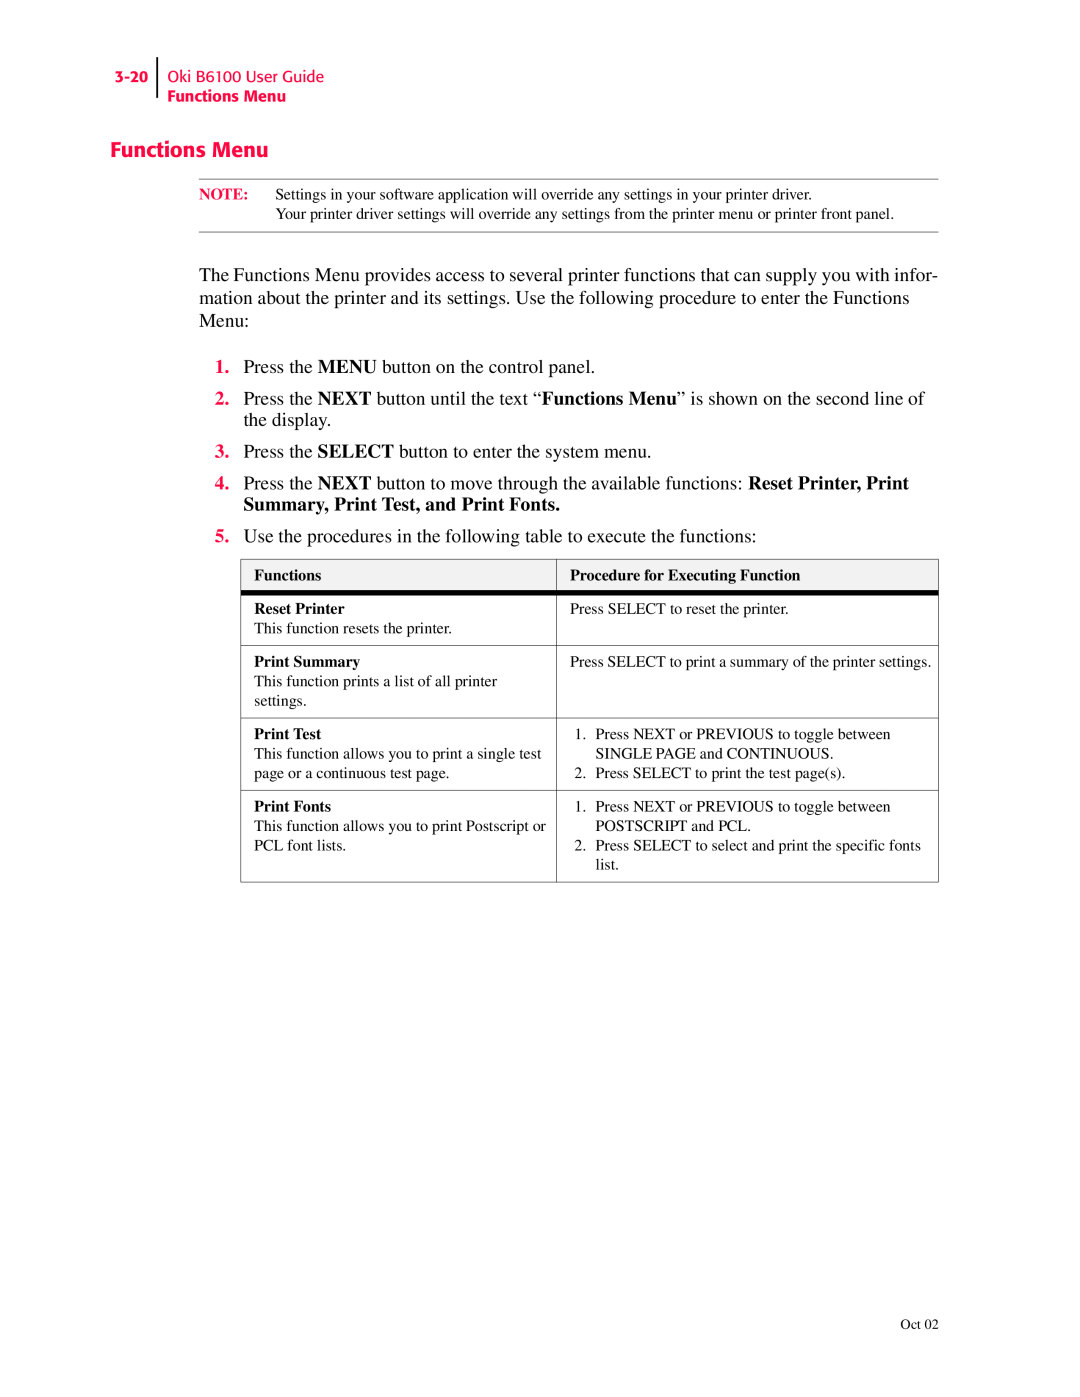 Oki 6100 manual Functions Menu, Summary, Print Test, and Print Fonts 